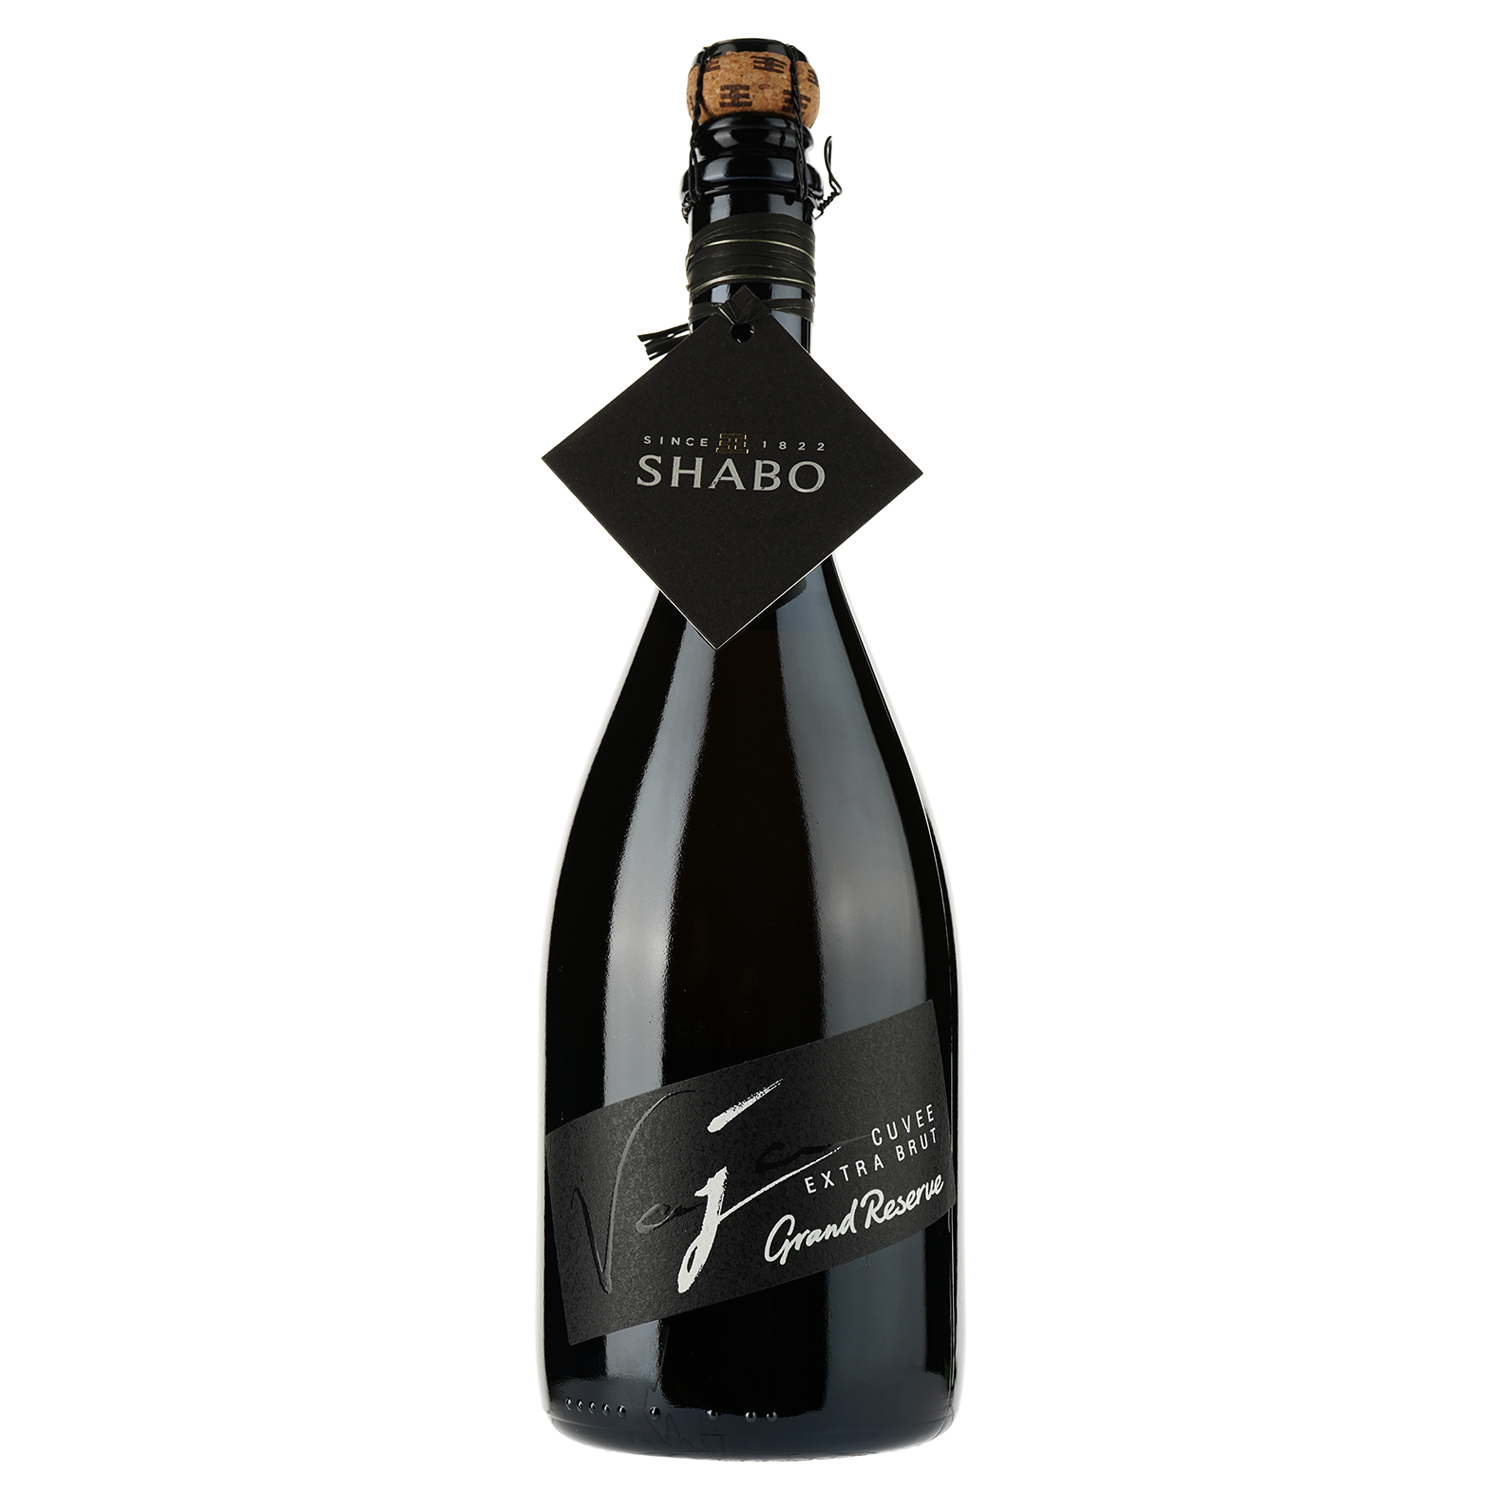 Игристое вино Shabo Grand Reserve Classic, экстра брют, белое, 13%, 0,75 л - фото 1